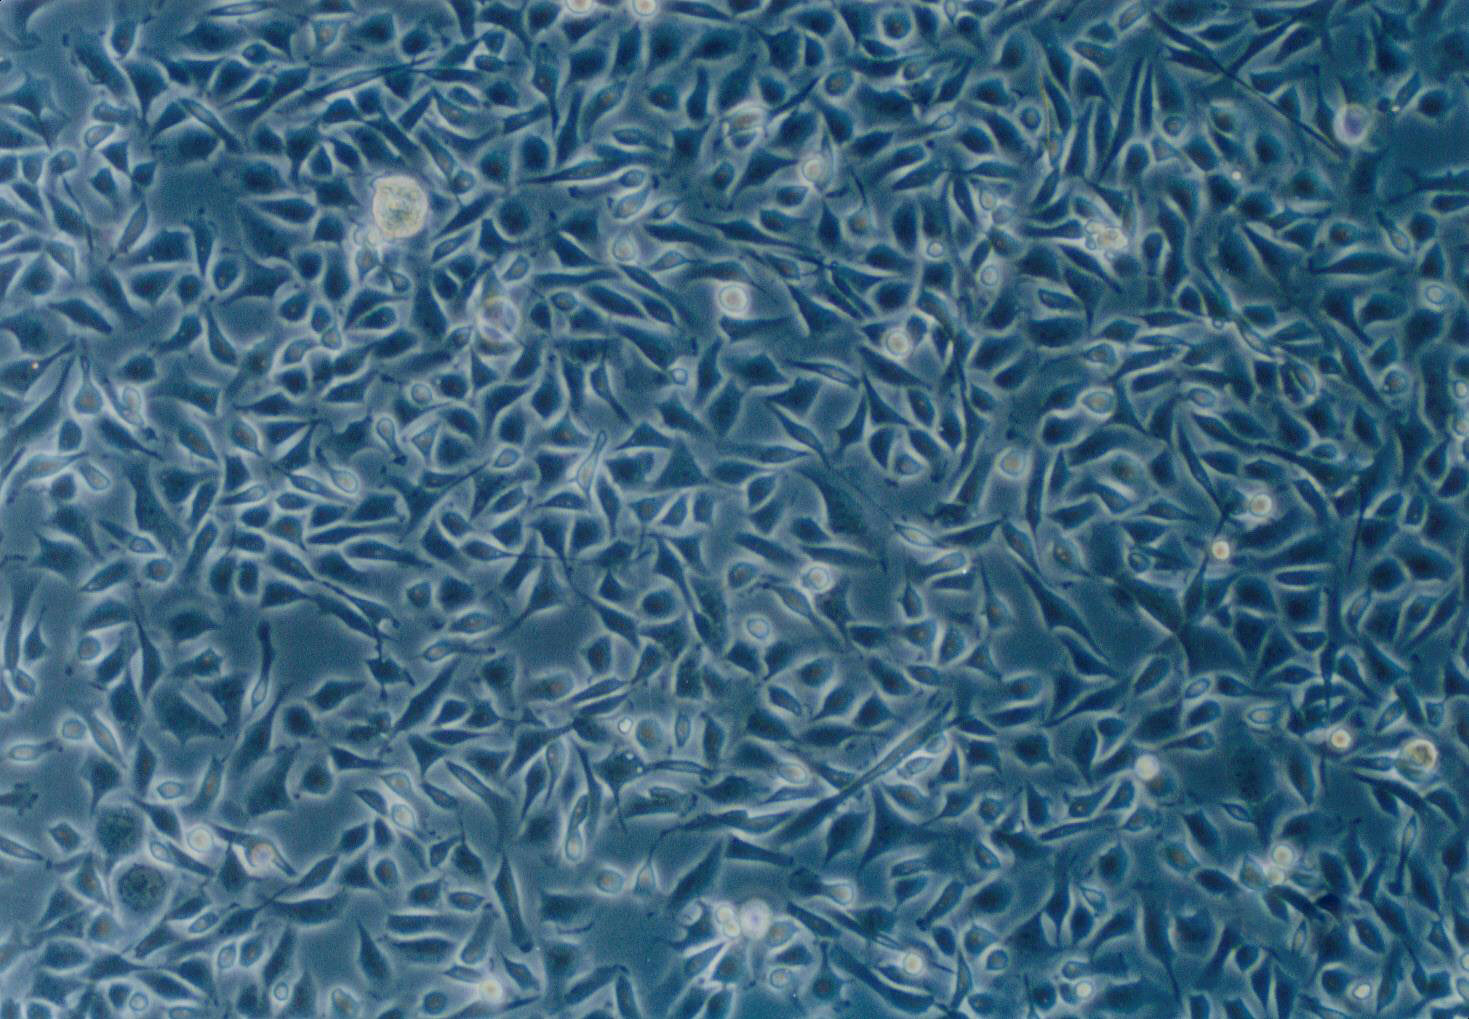 M109 epithelioid cells小鼠肺癌细胞系,M109 epithelioid cells